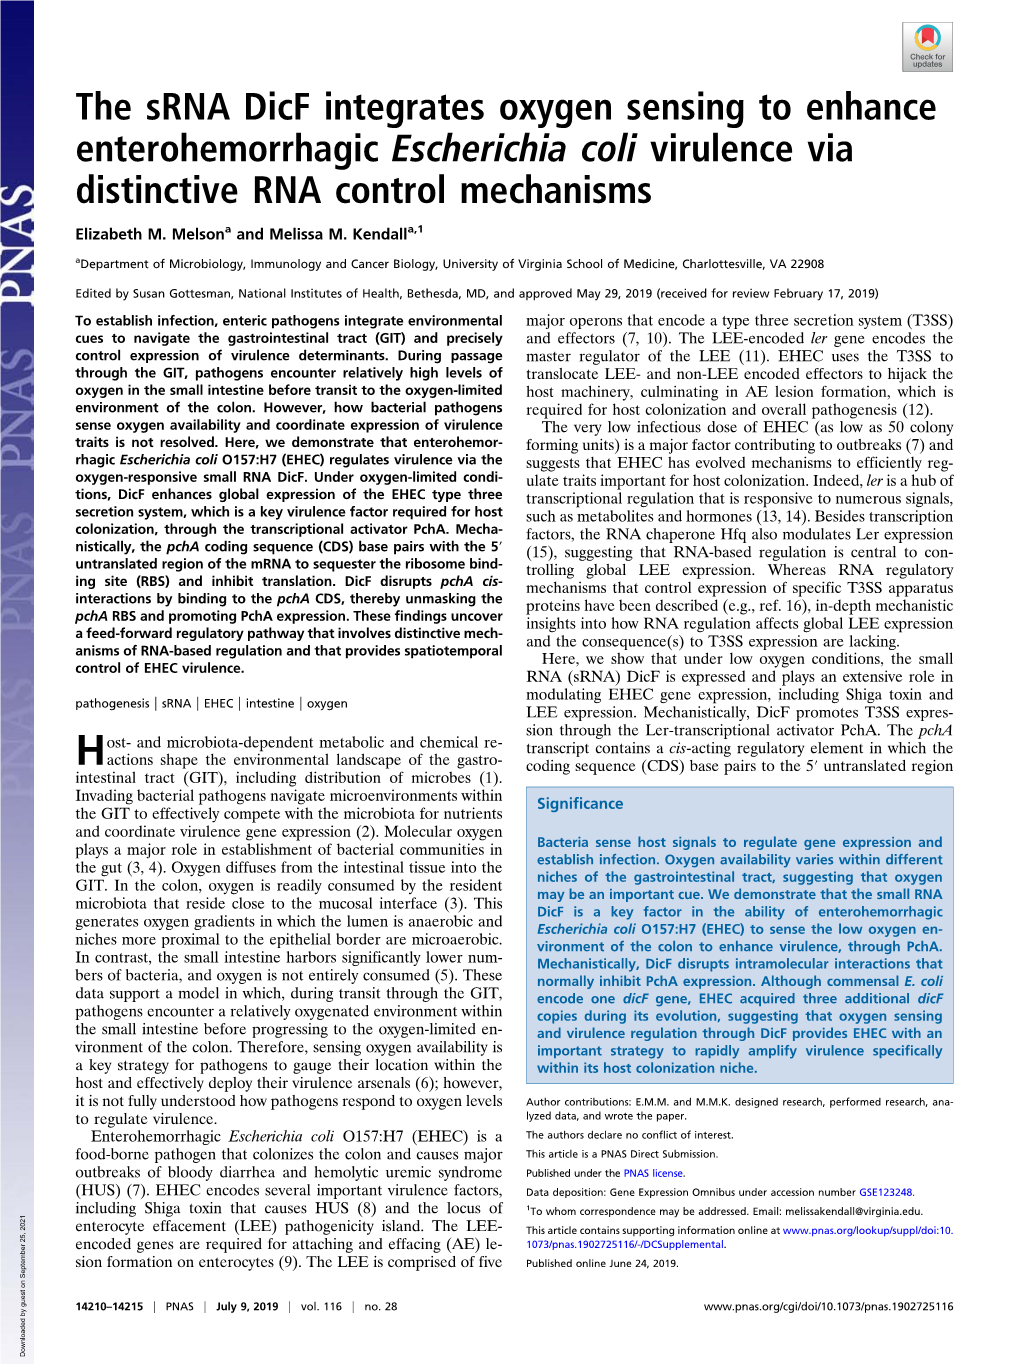 The Srna Dicf Integrates Oxygen Sensing to Enhance Enterohemorrhagic Escherichia Coli Virulence Via Distinctive RNA Control Mechanisms